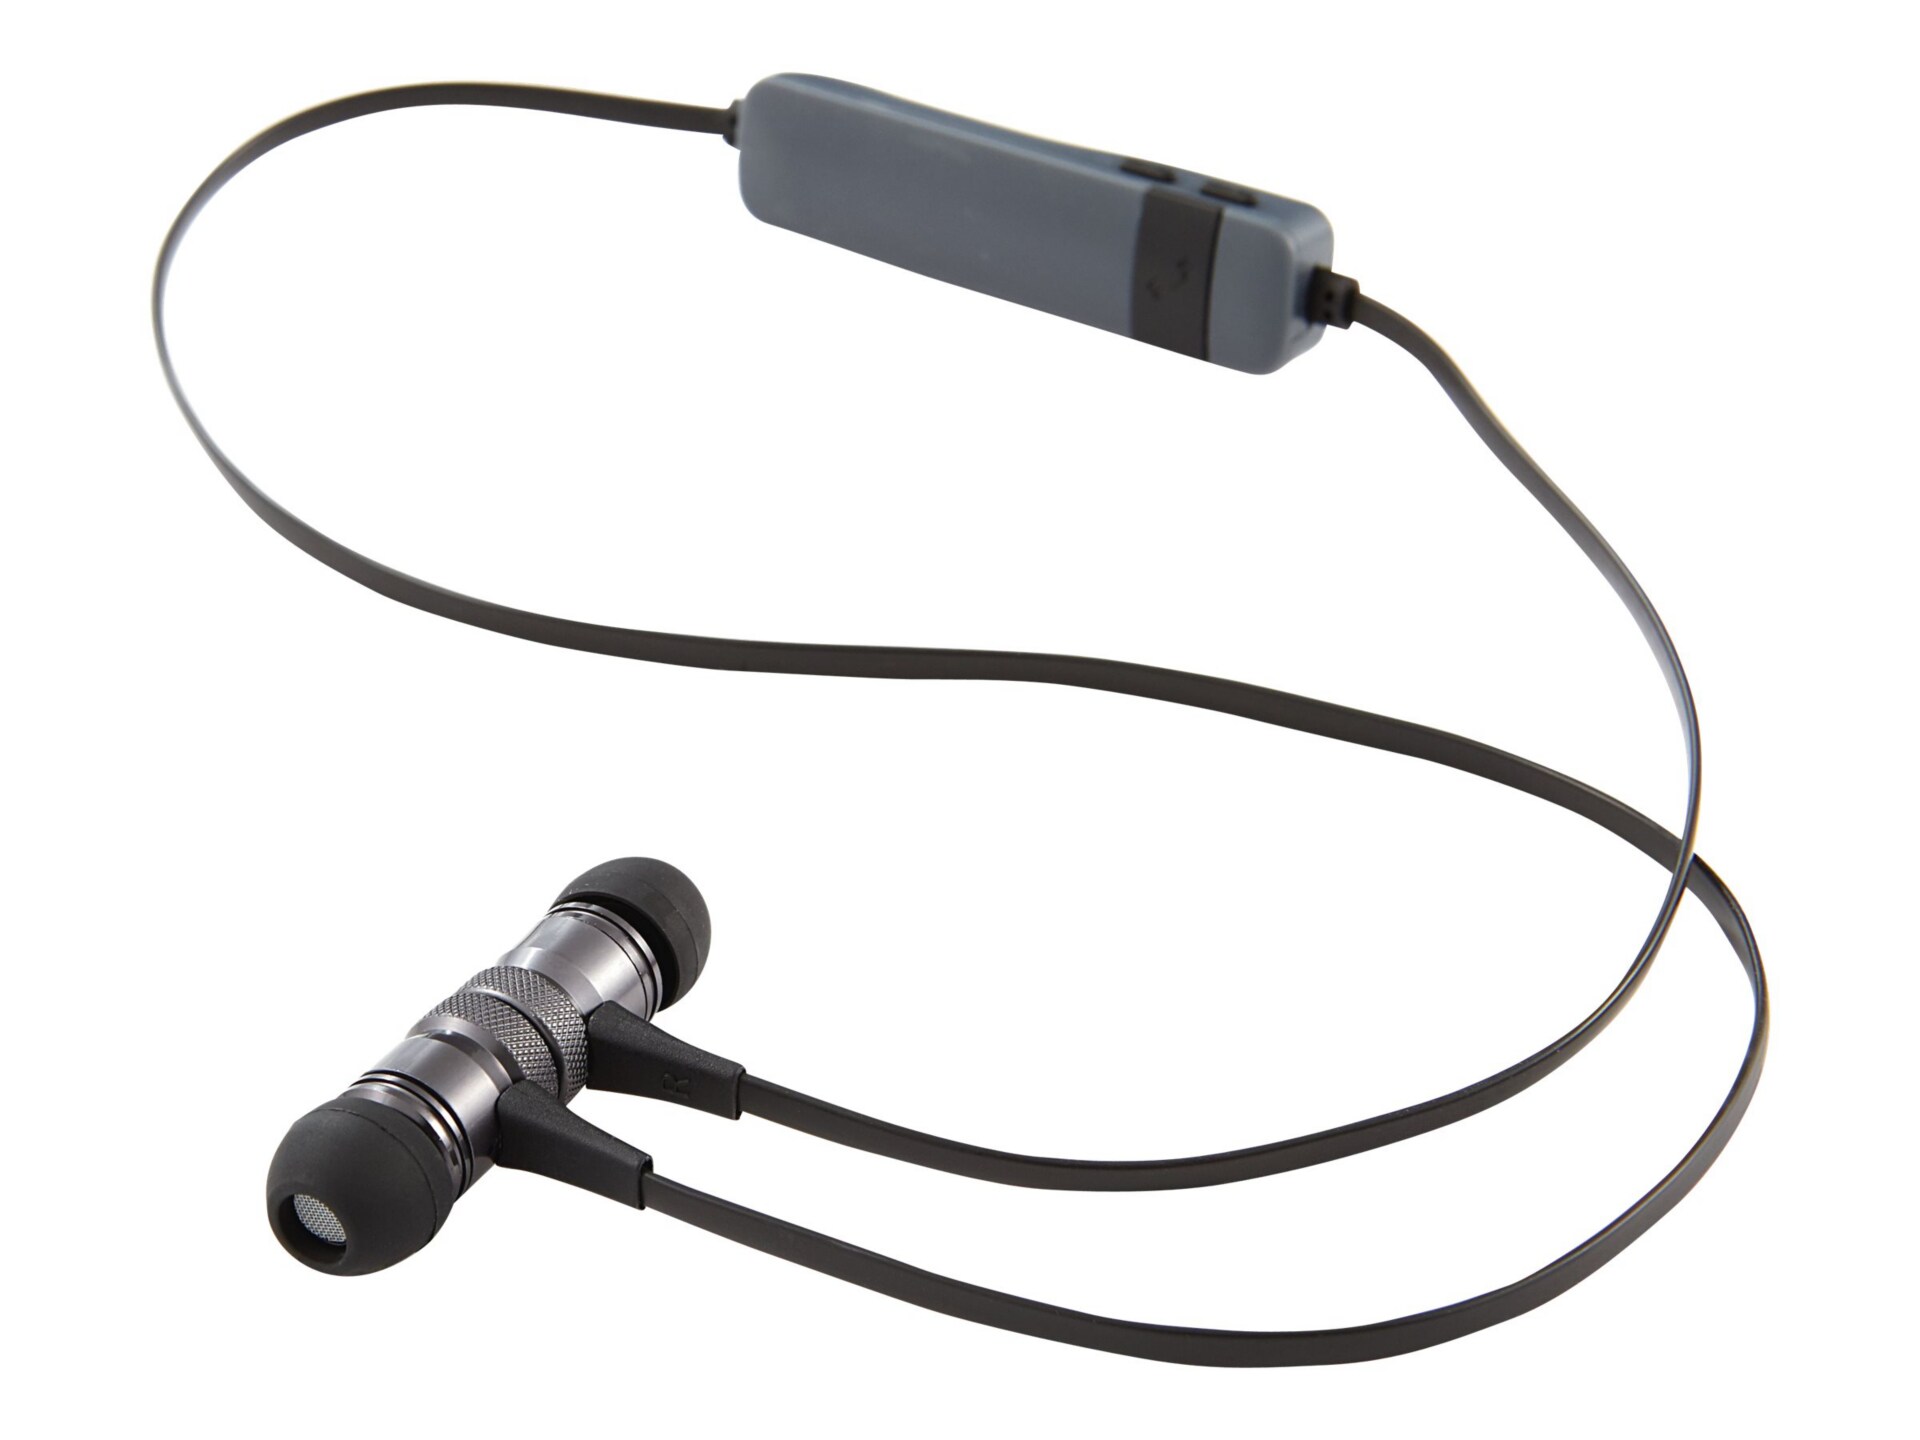 Verbatim Bluetooth Stereo Earphones - earphones with mic